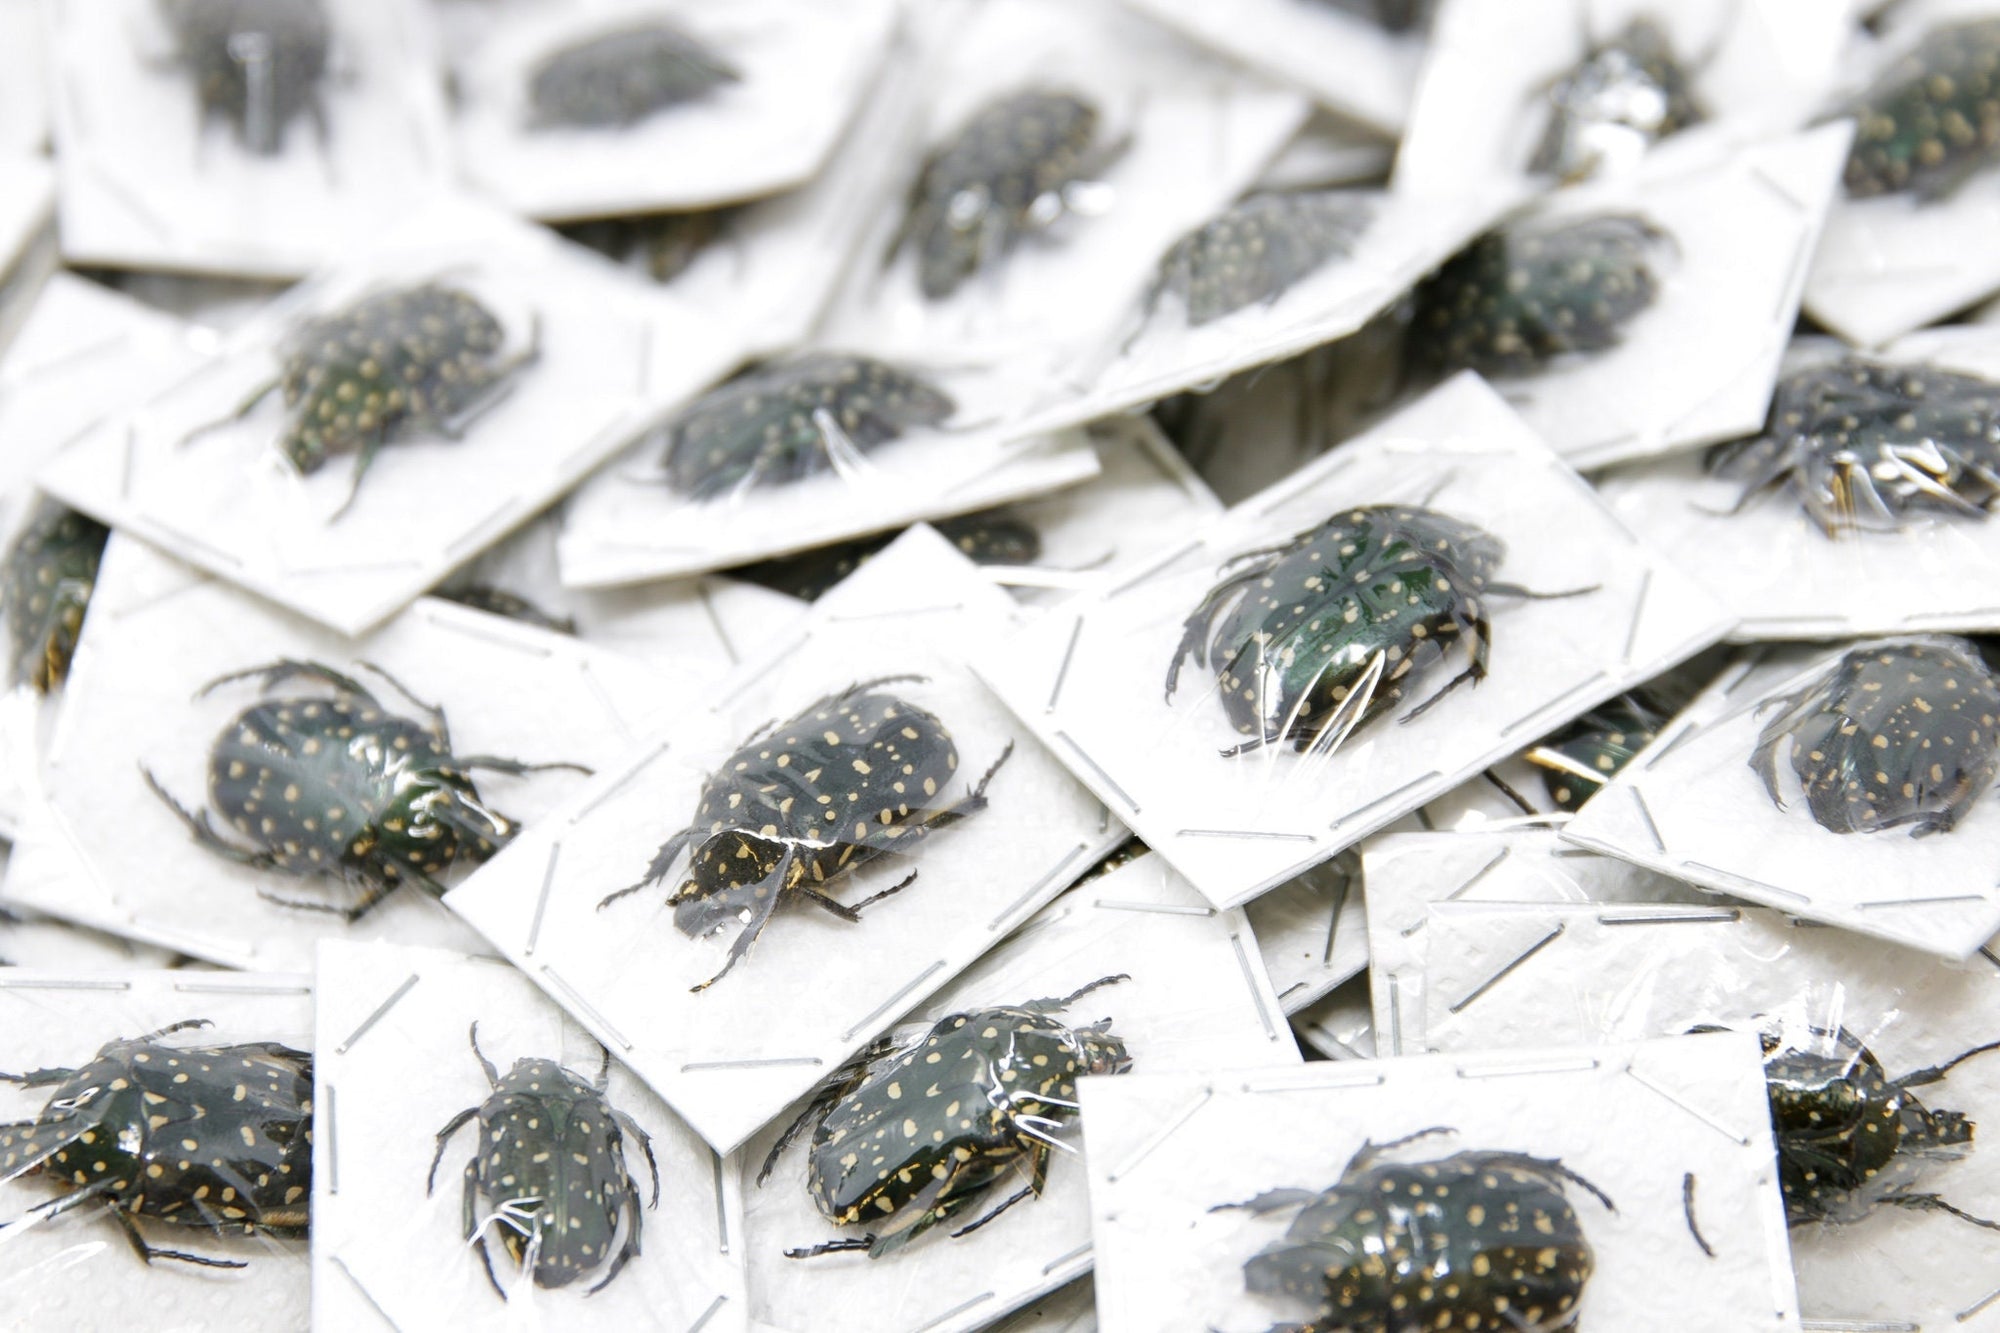 2 x Speckled Scarab Beetles, Platynocephalus niveoguttata, A1 Entomology Specimens for Artistic Creation